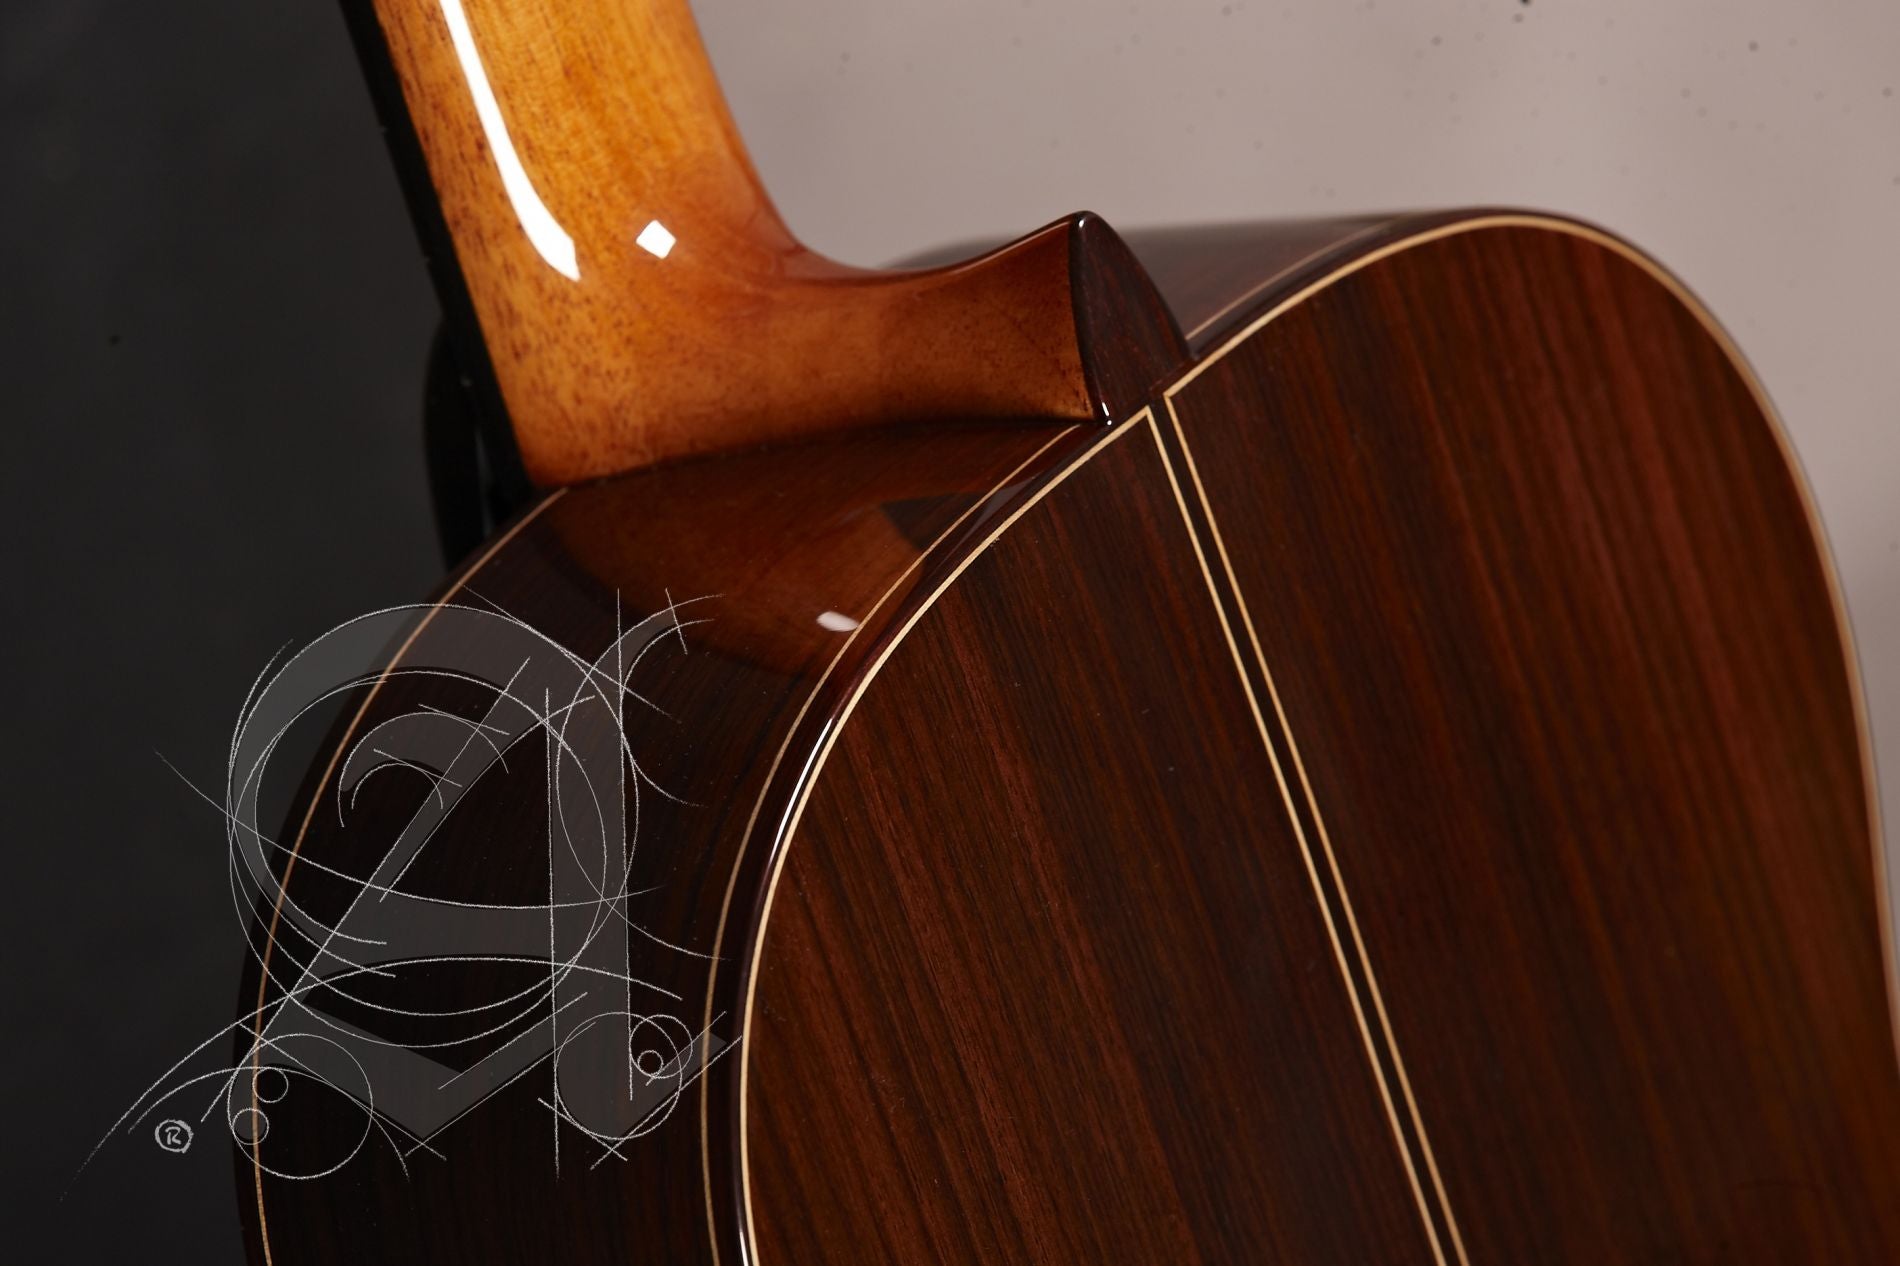 Alhambra Linea Professional Classical Guitar (with original hardcase)